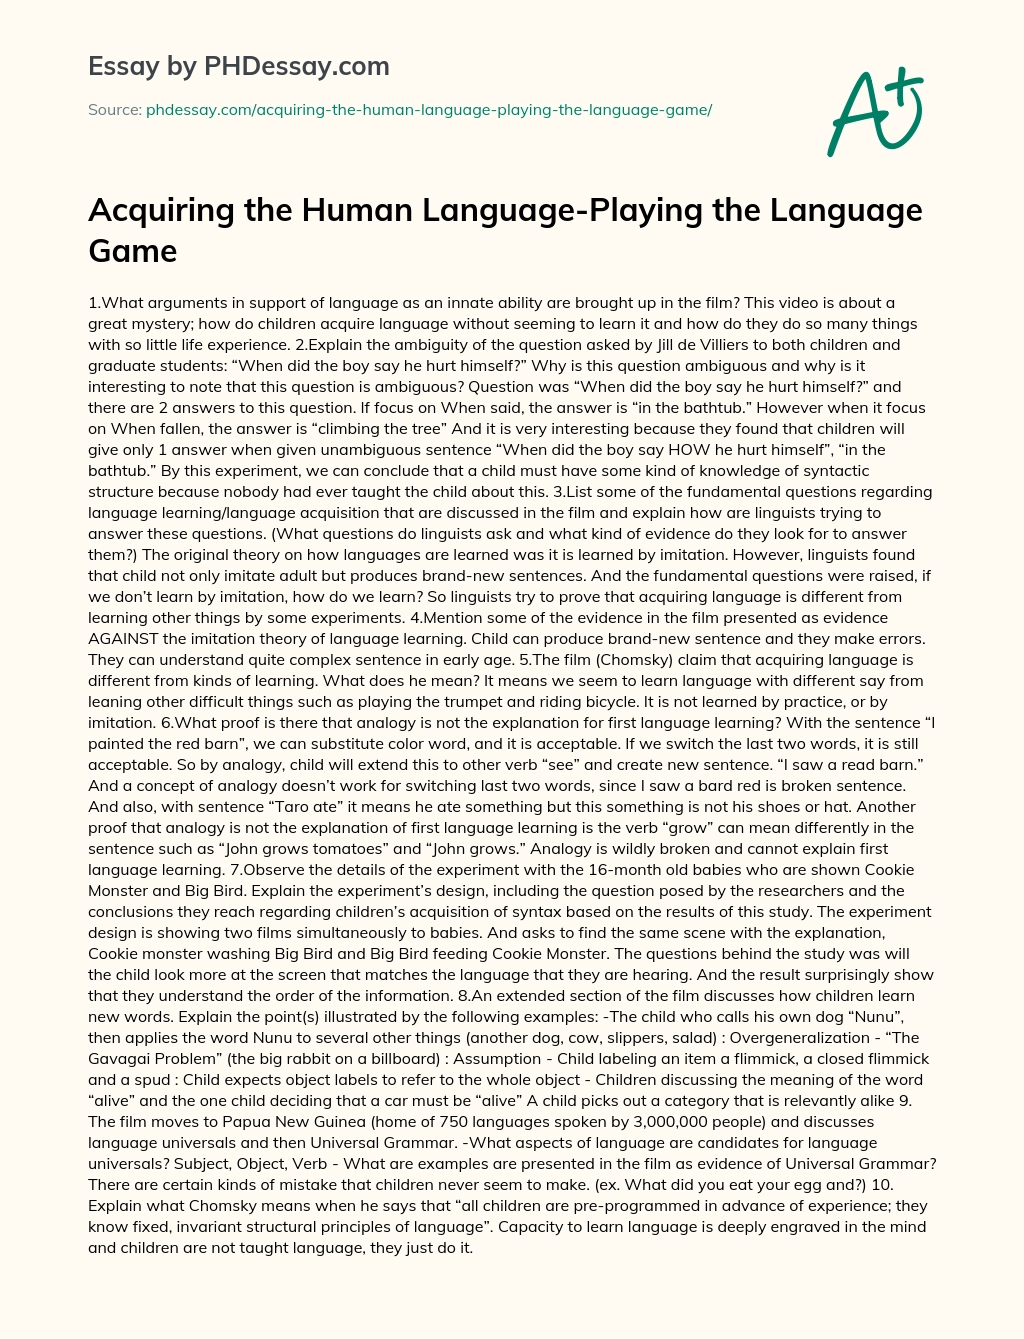 Acquiring the Human Language-Playing the Language Game essay